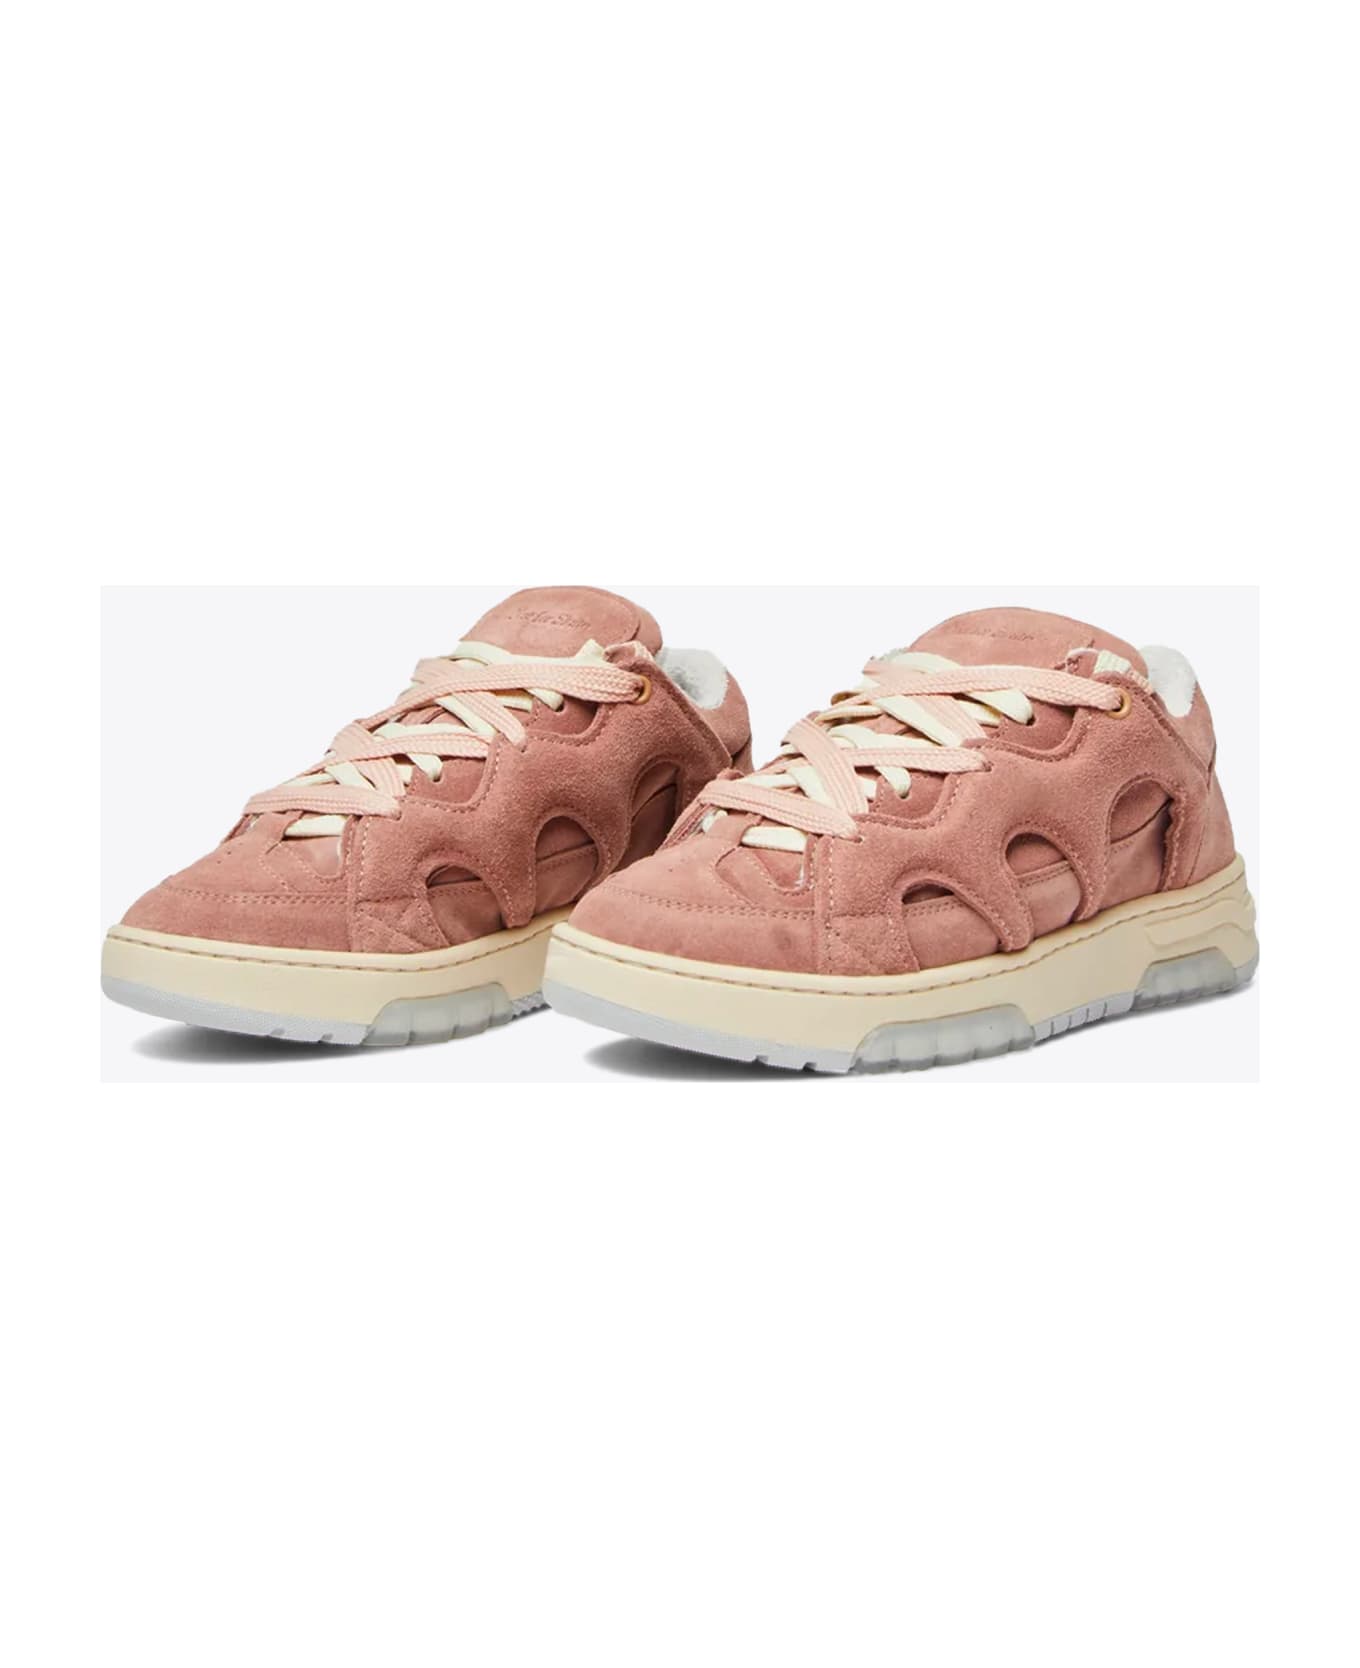 Paura Santha 1 Suede Antique Pink Suede Low Sneaker - Rosa スニーカー